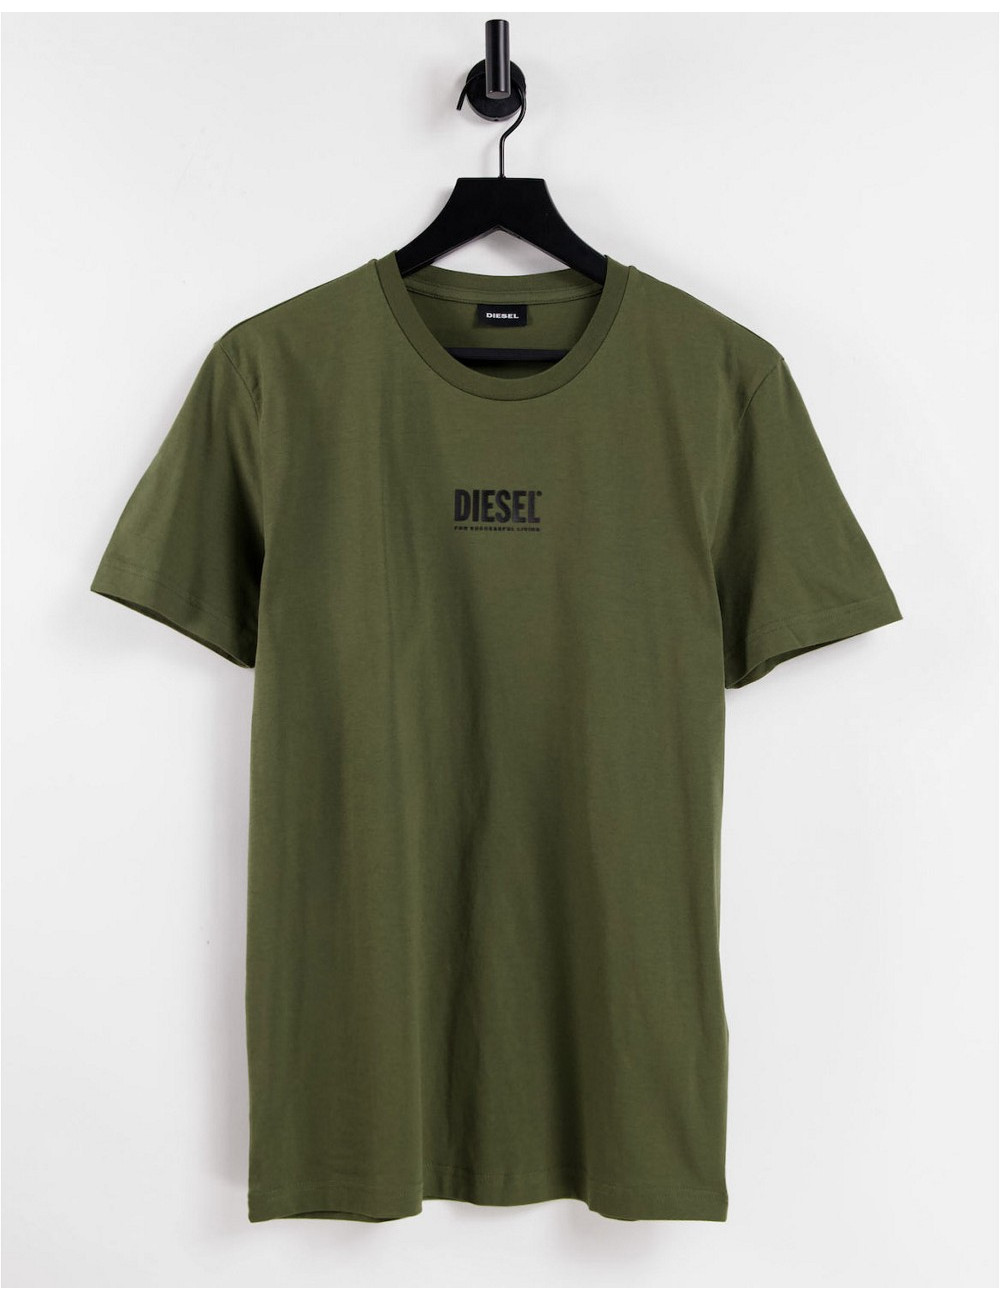 Diesel small logo t-shirt...